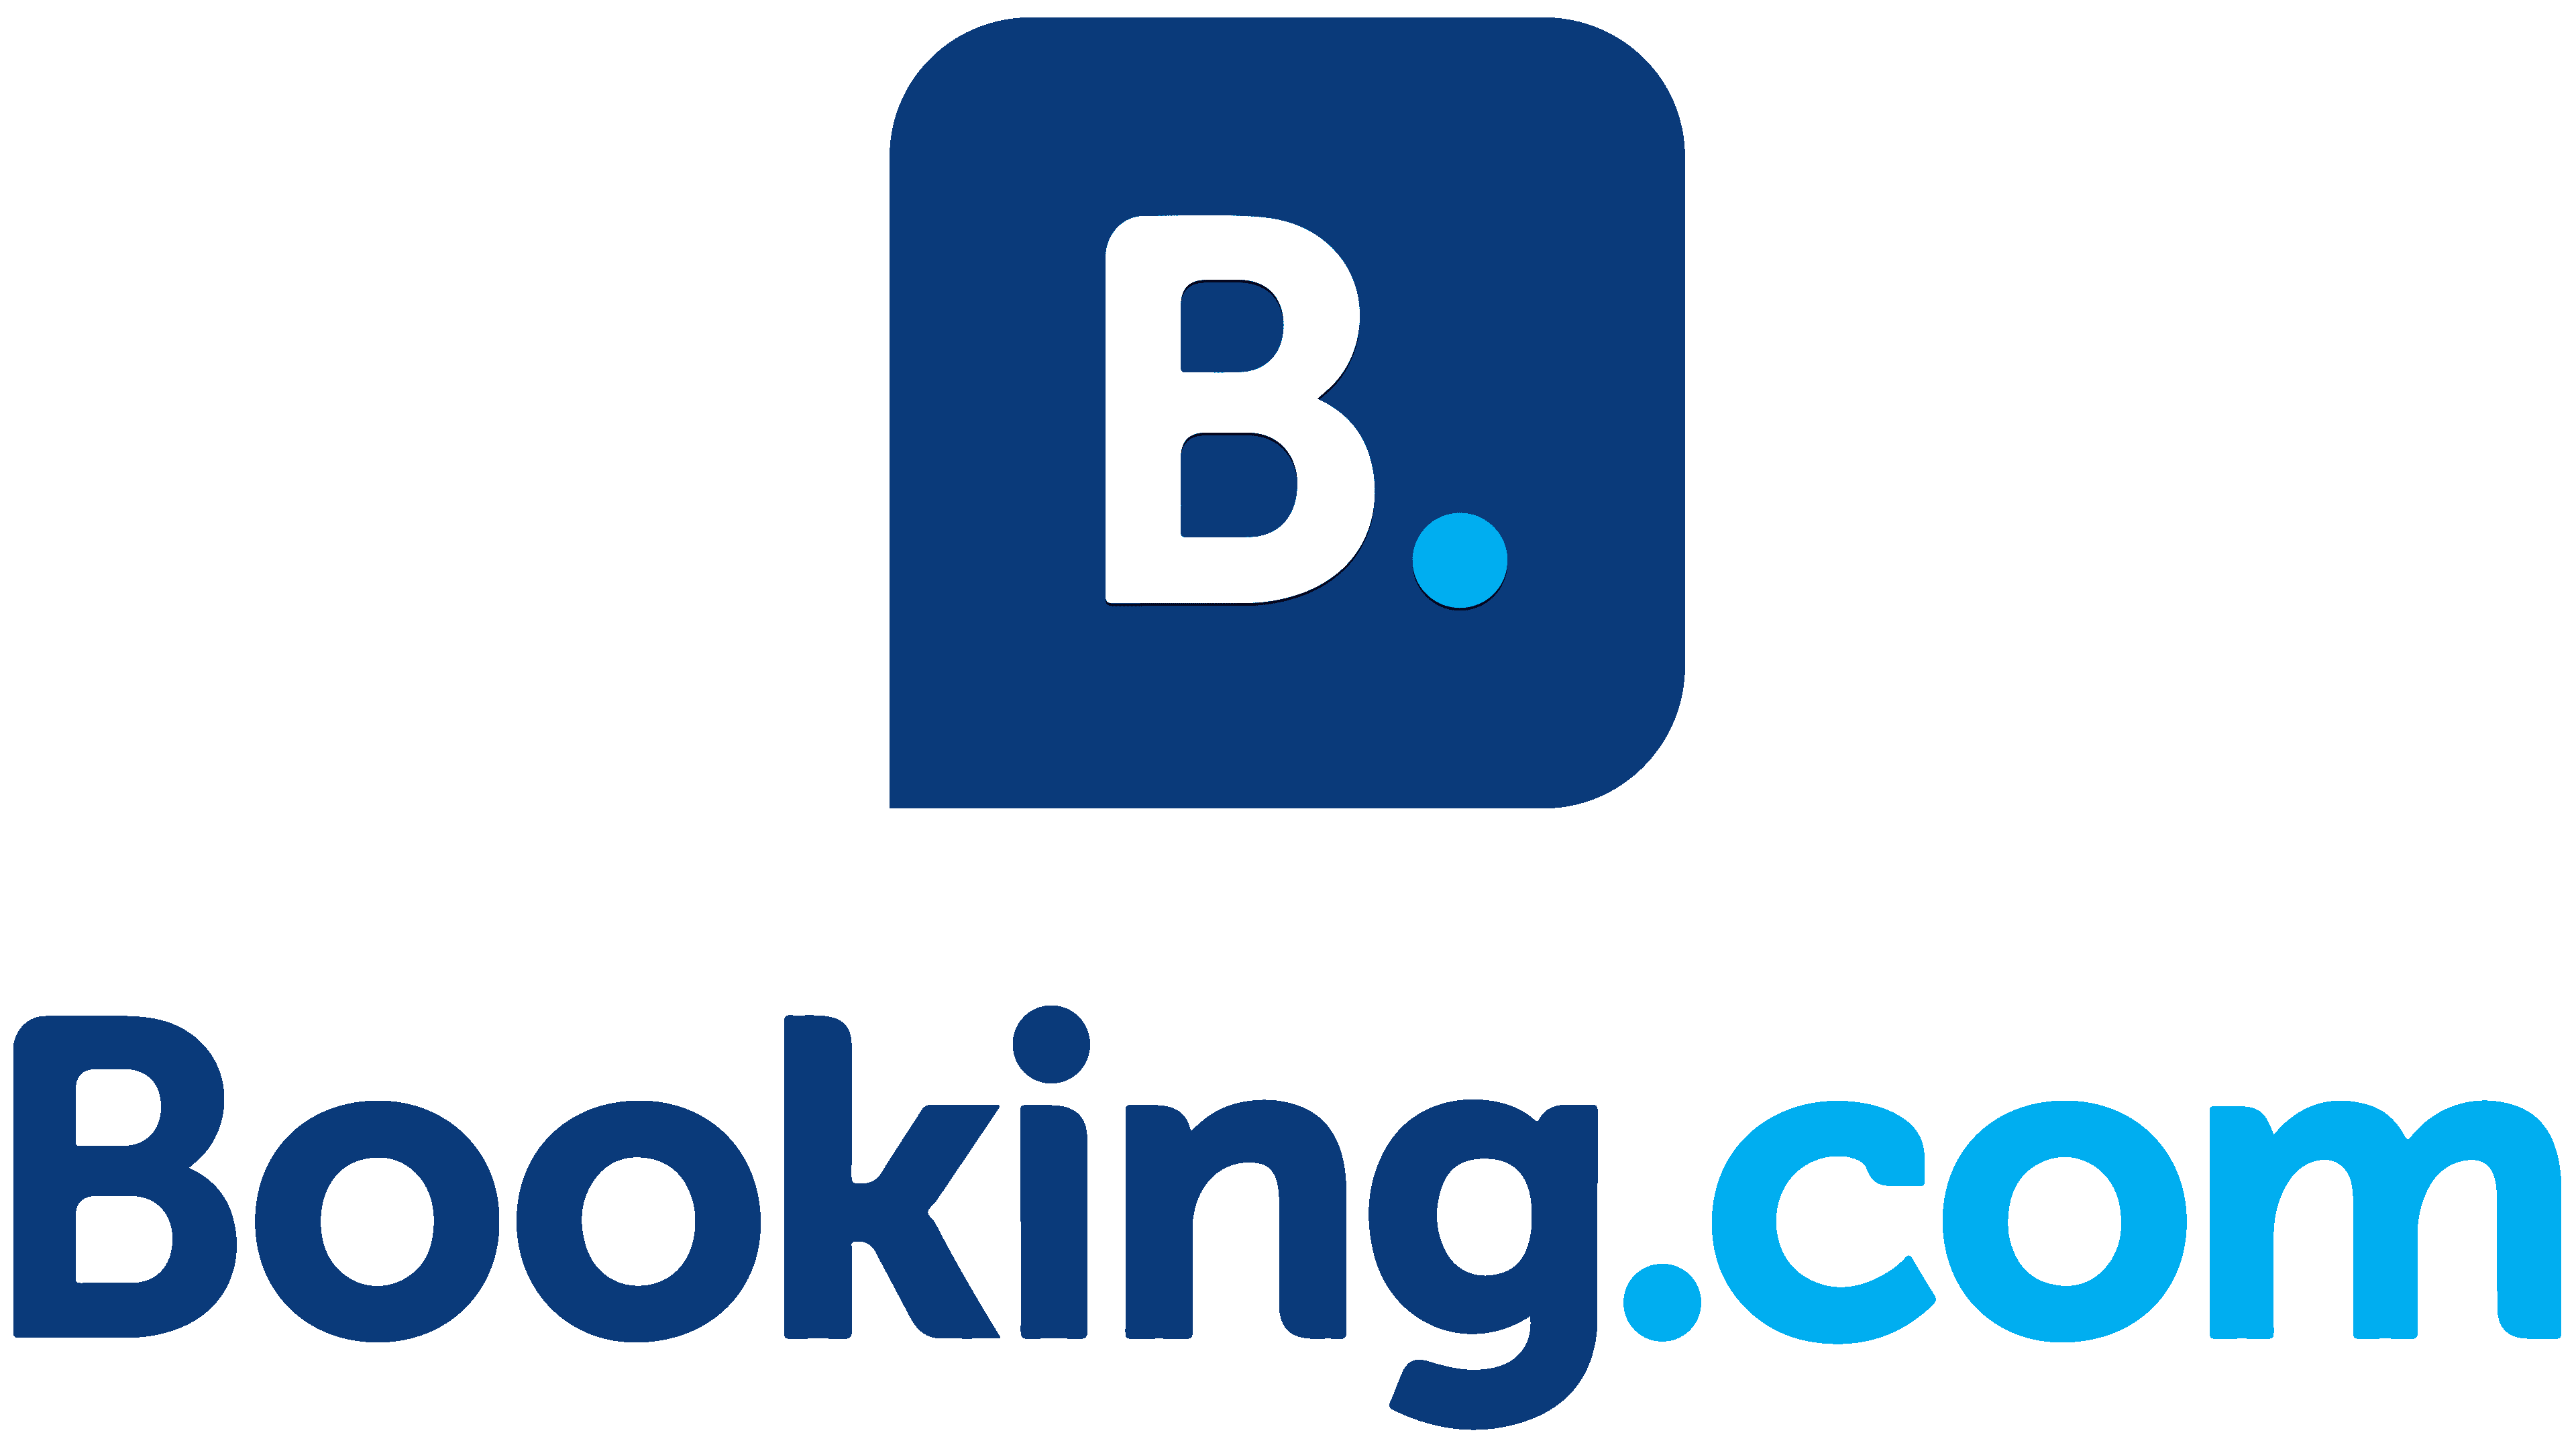 New booking ru. Booking логотип. Значок букинг. Booking.com логотип. Bauking.